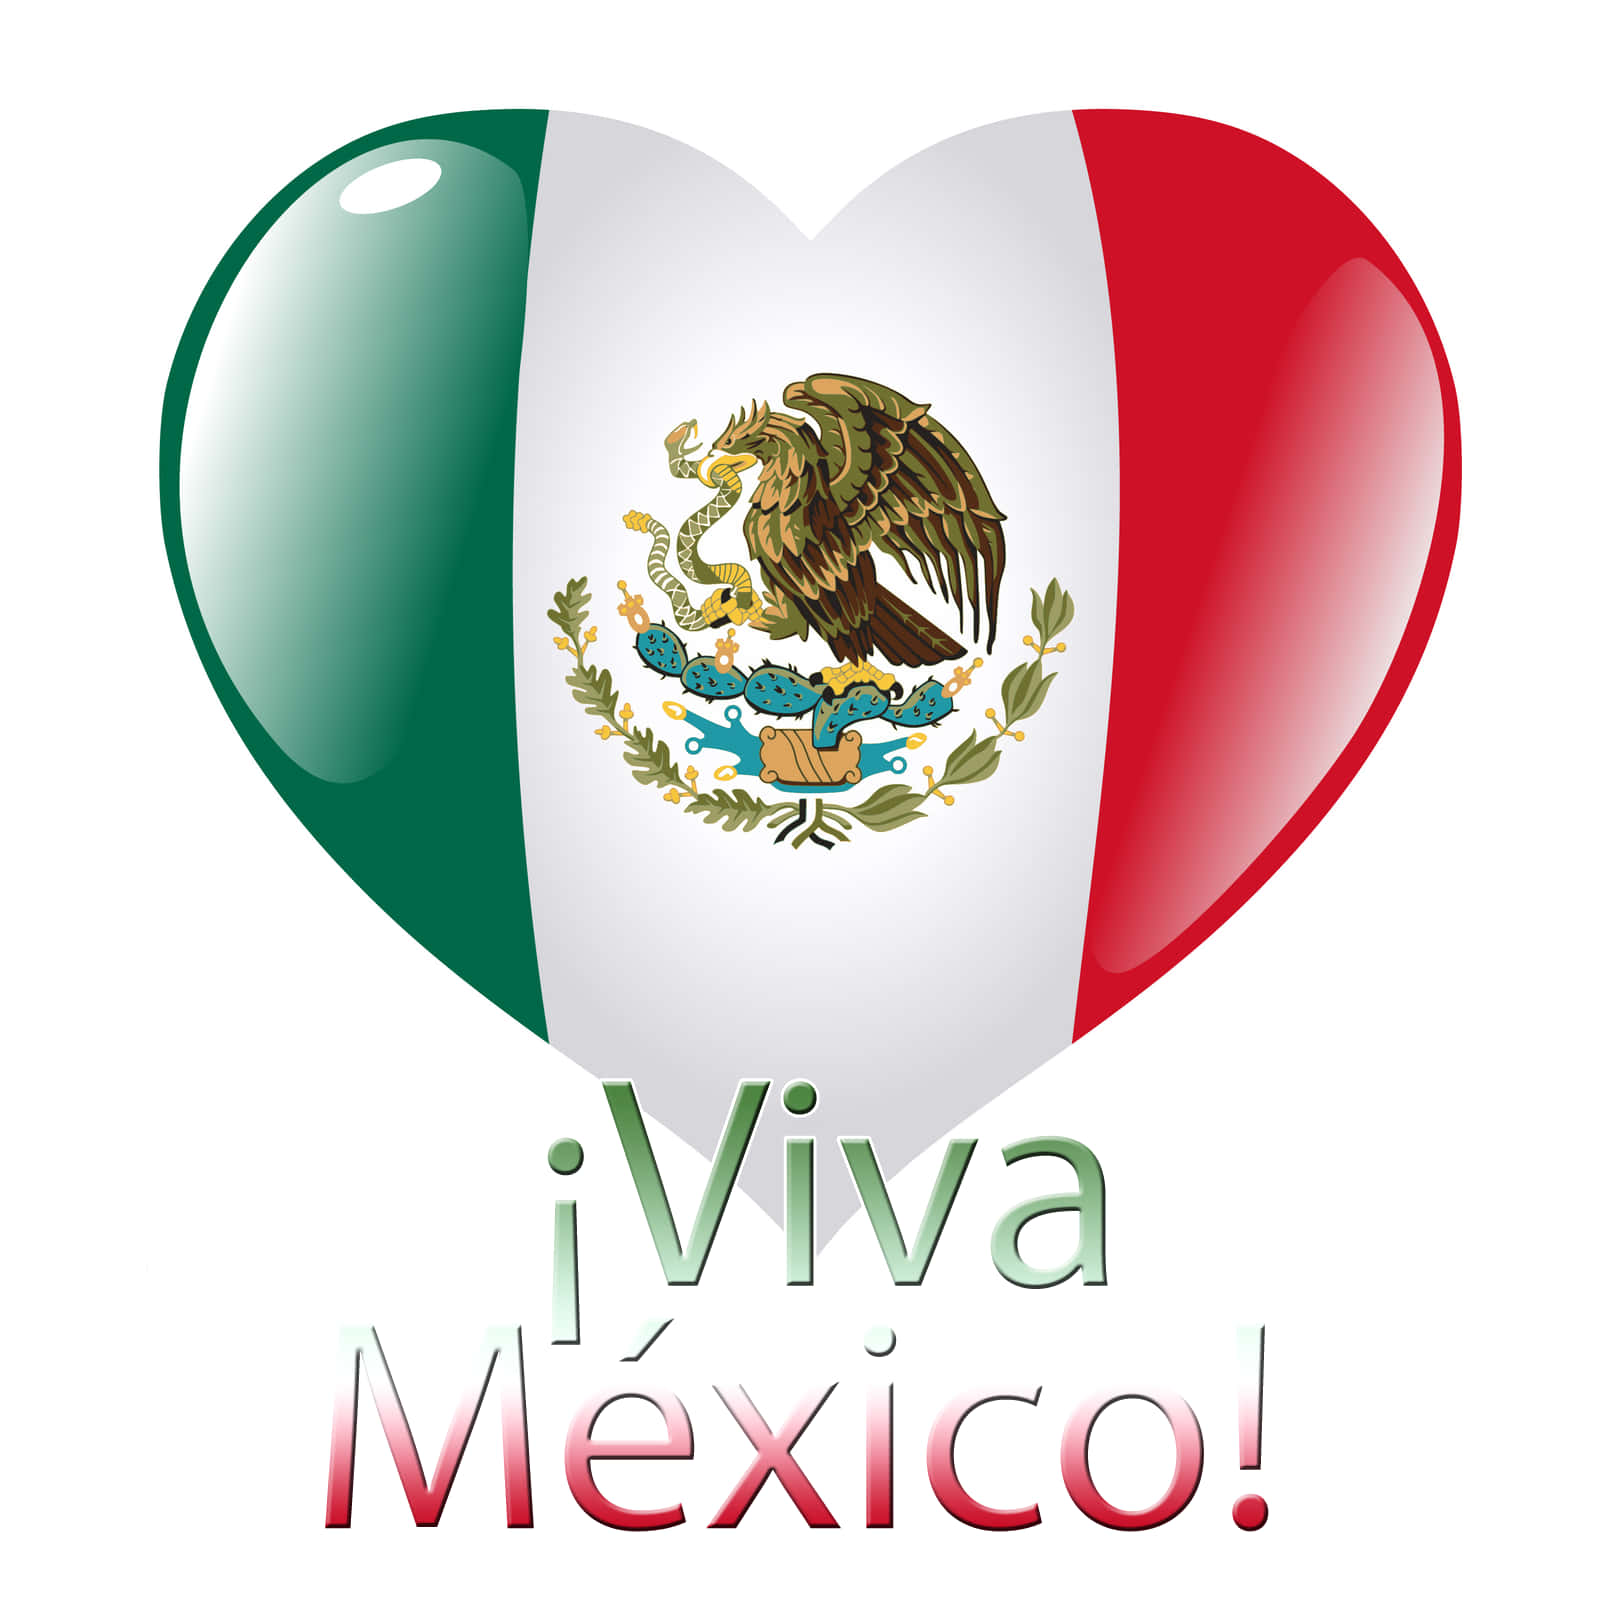 Viva la belleza de México! (Long Live the Beauty of Mexico!) Wallpaper